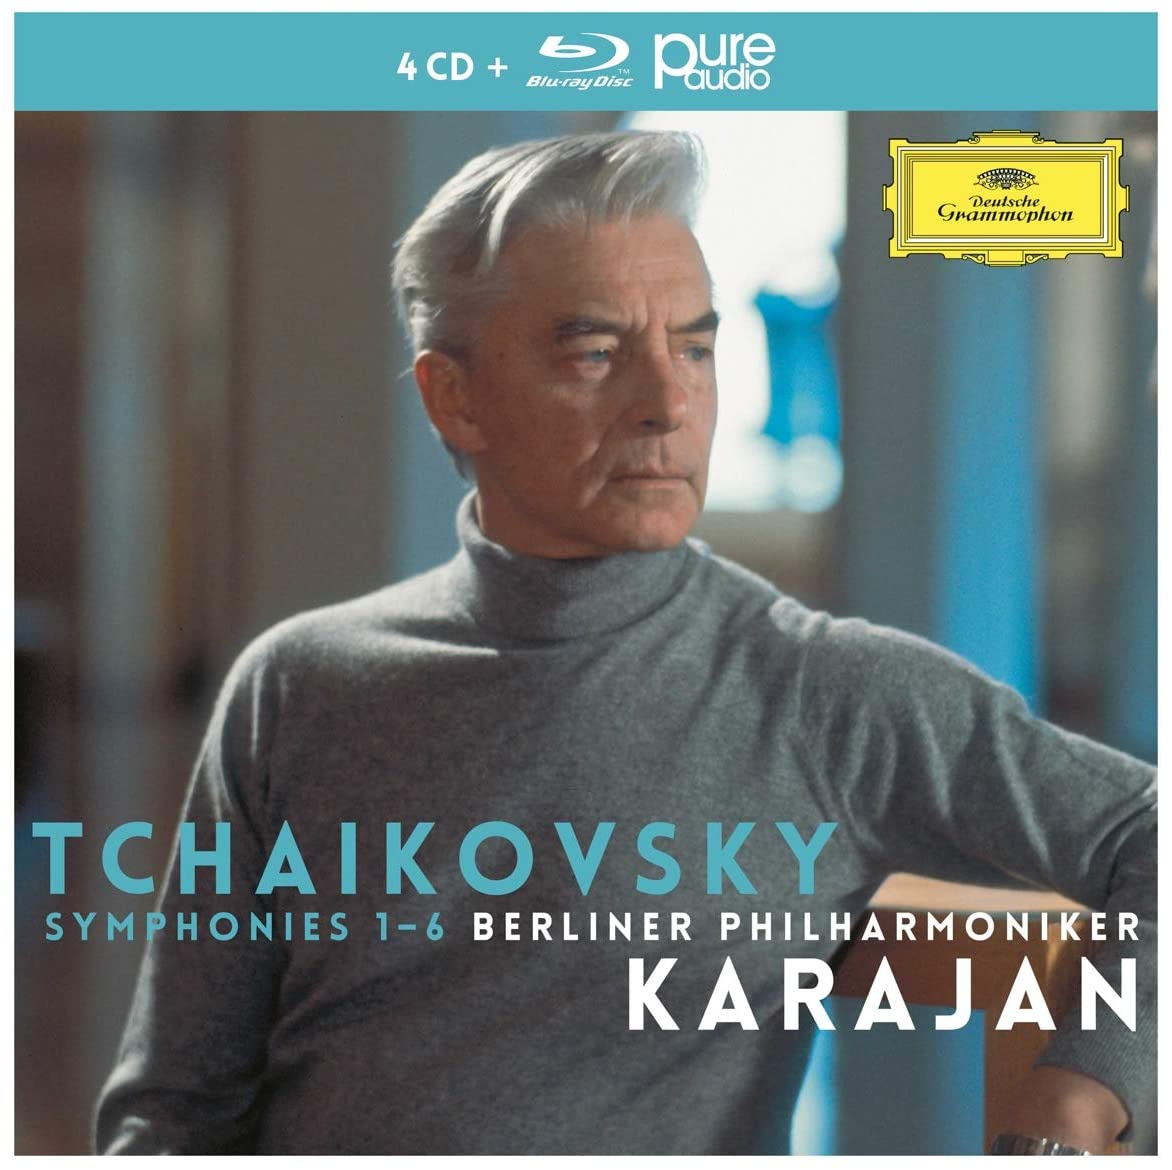 Tchaikovsky - Symphonies 1 - 6 (4xCD + Blu Ray Disc) | Berliner Philharmoniker, Herbert von Karajan